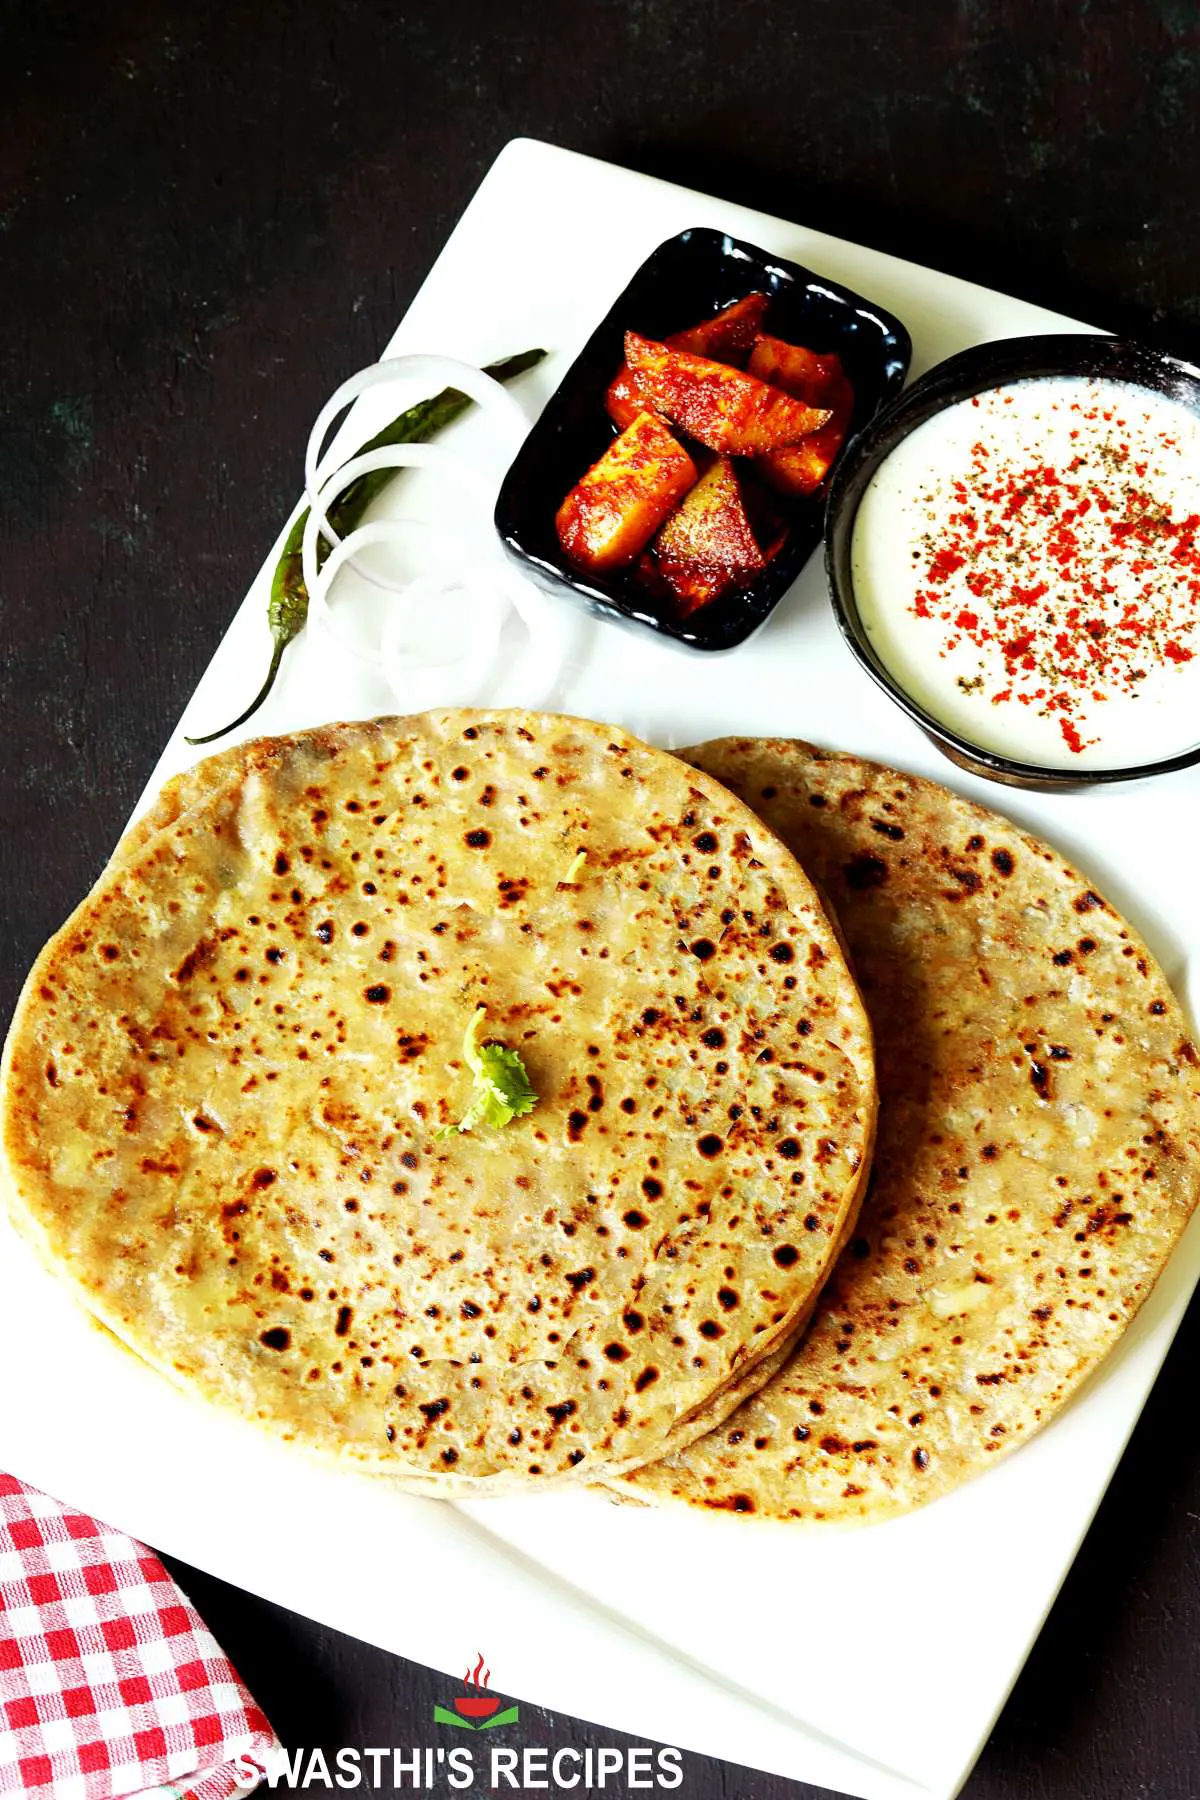 Chapati Recipe (Indian Flatbread) - Swasthi's Recipes